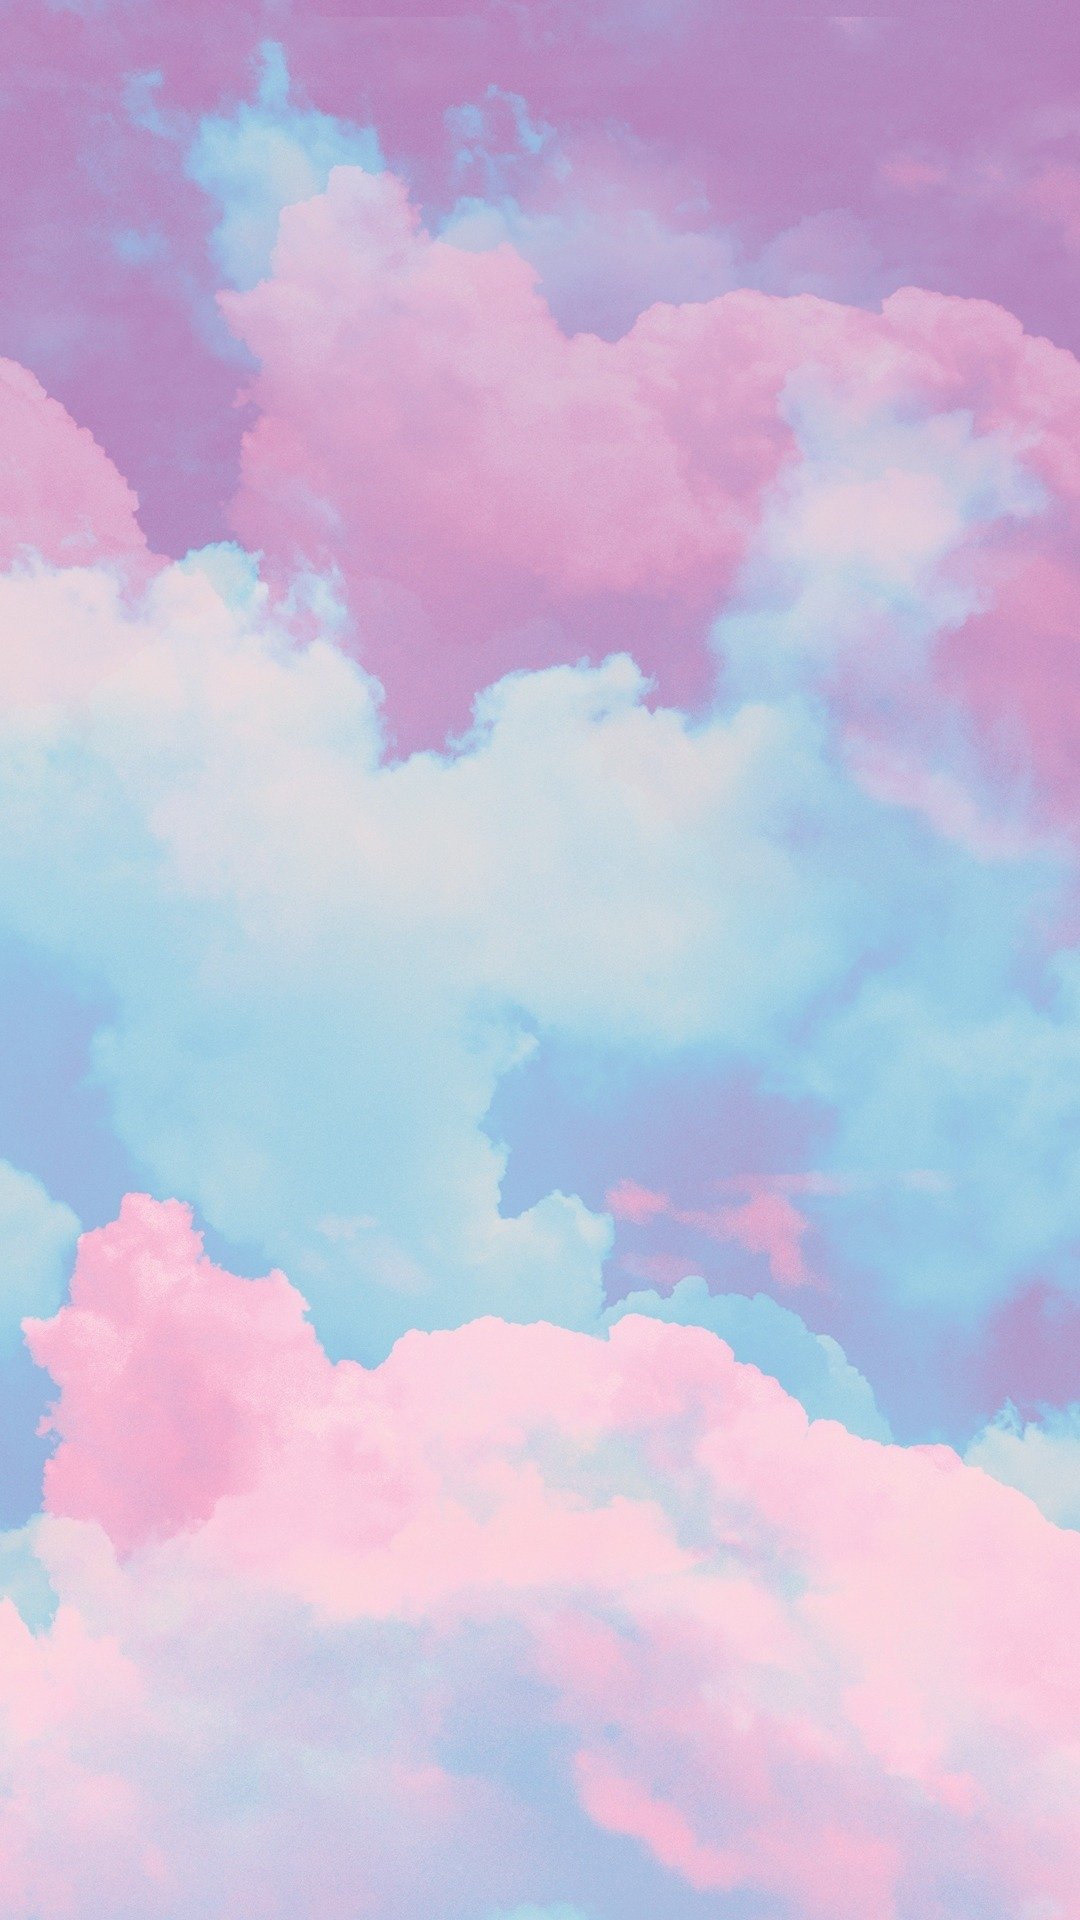 whatsappの素晴らしい壁紙,空,雲,ピンク,昼間,雰囲気